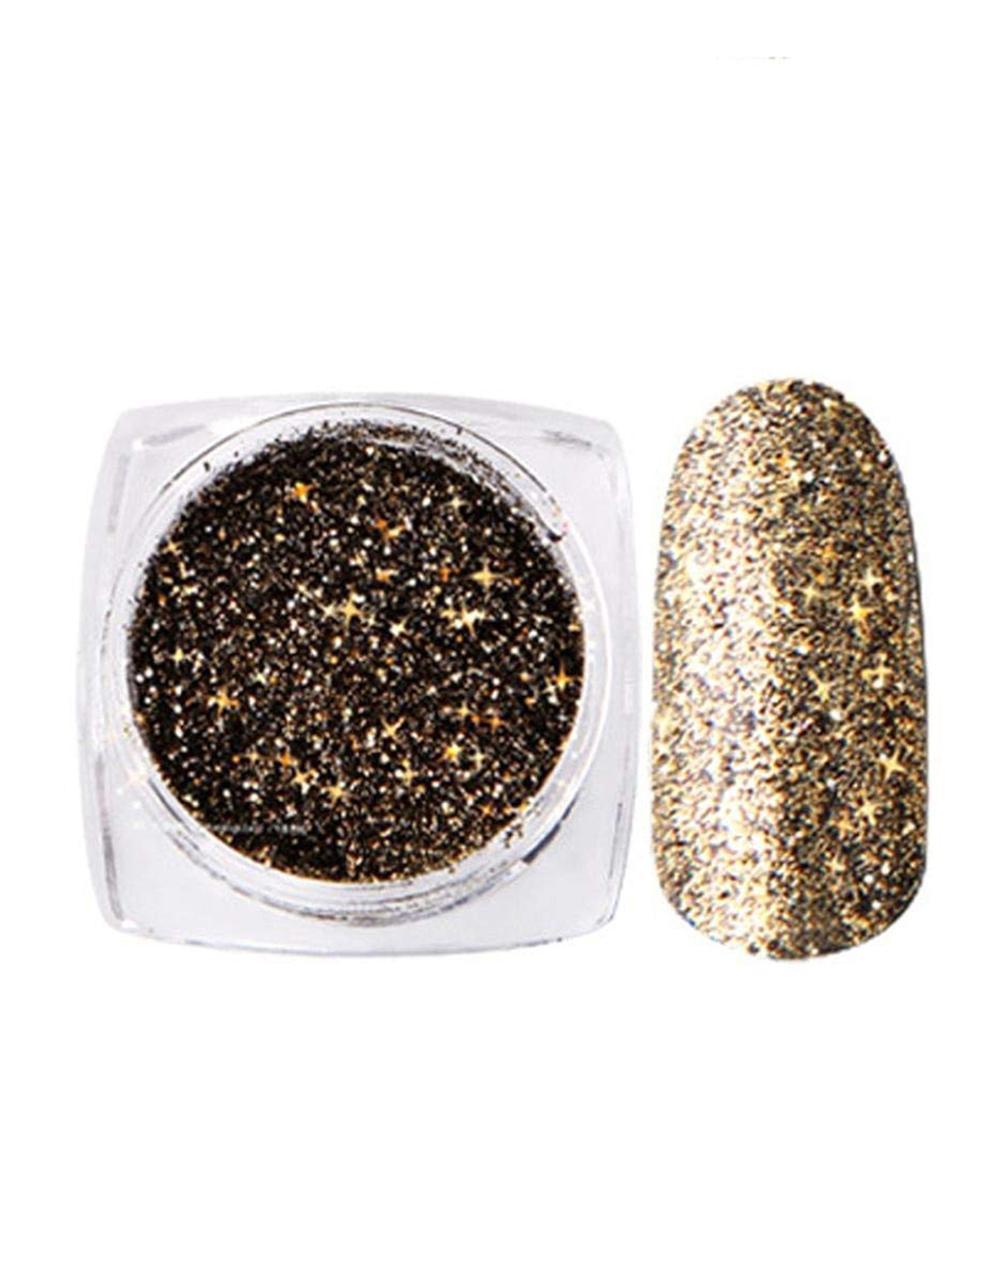 DesiButik's Nail Art Glitter Powder Golden And Black NC08